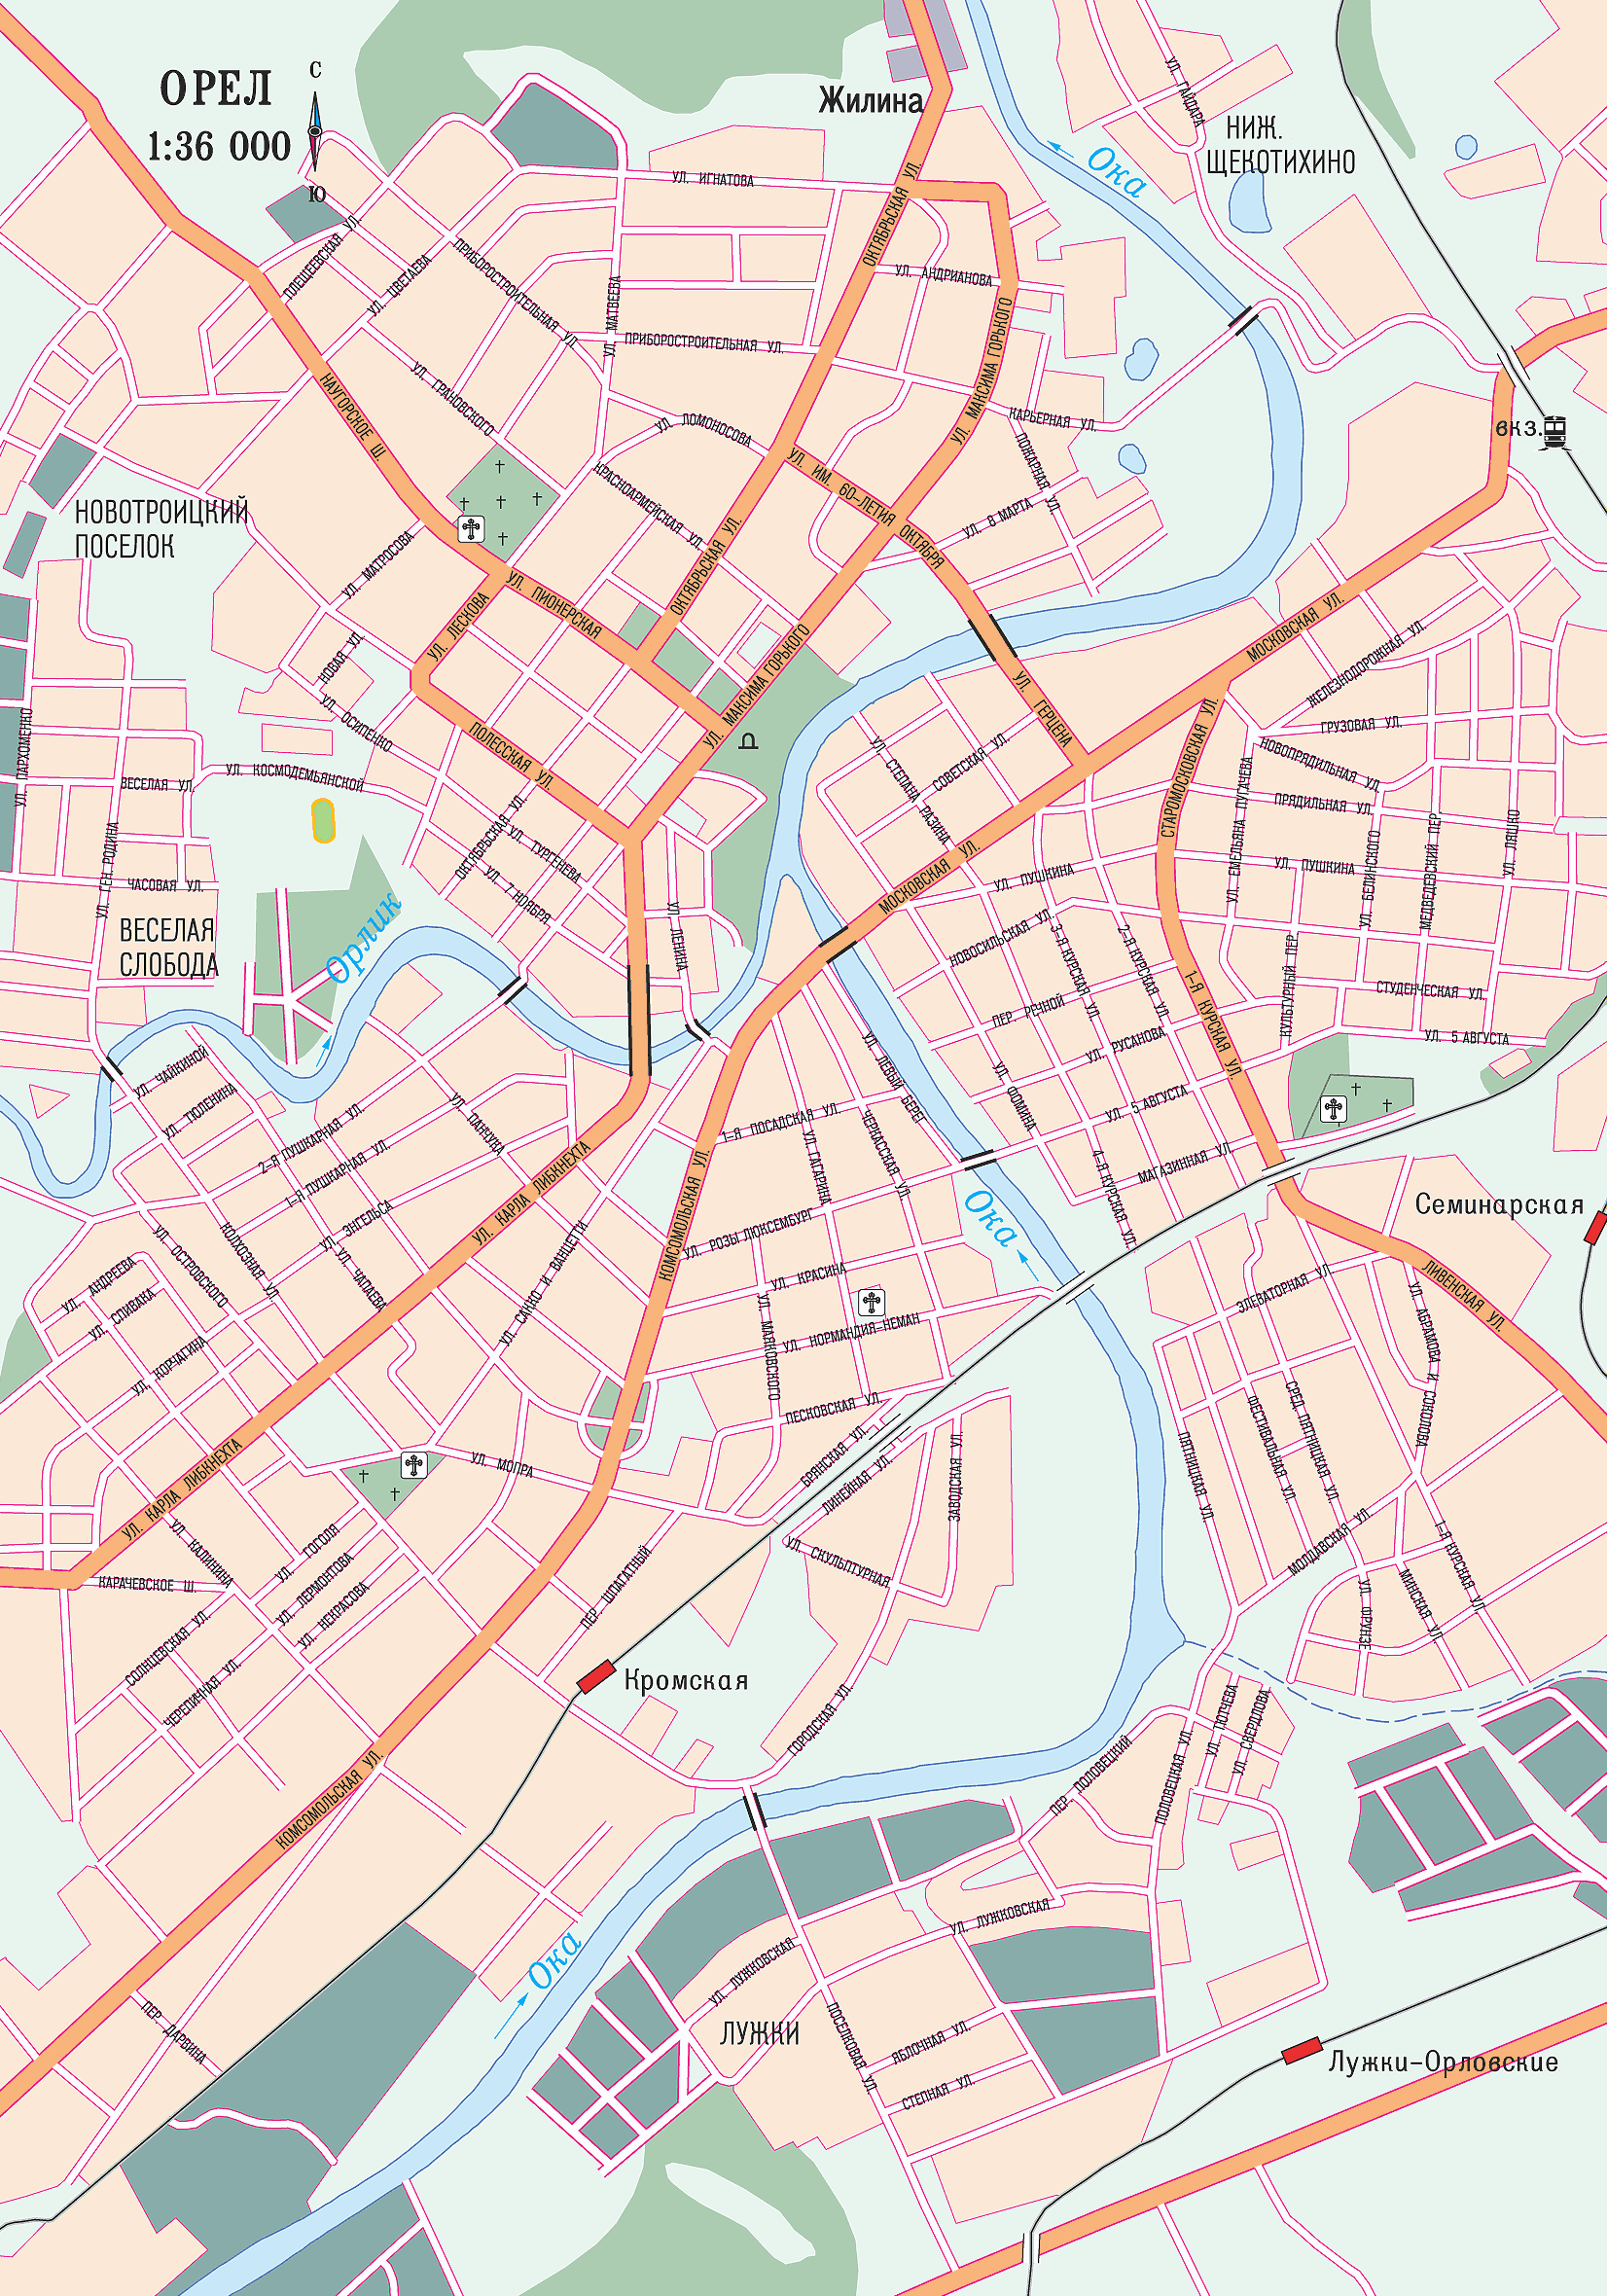 Map of Orel